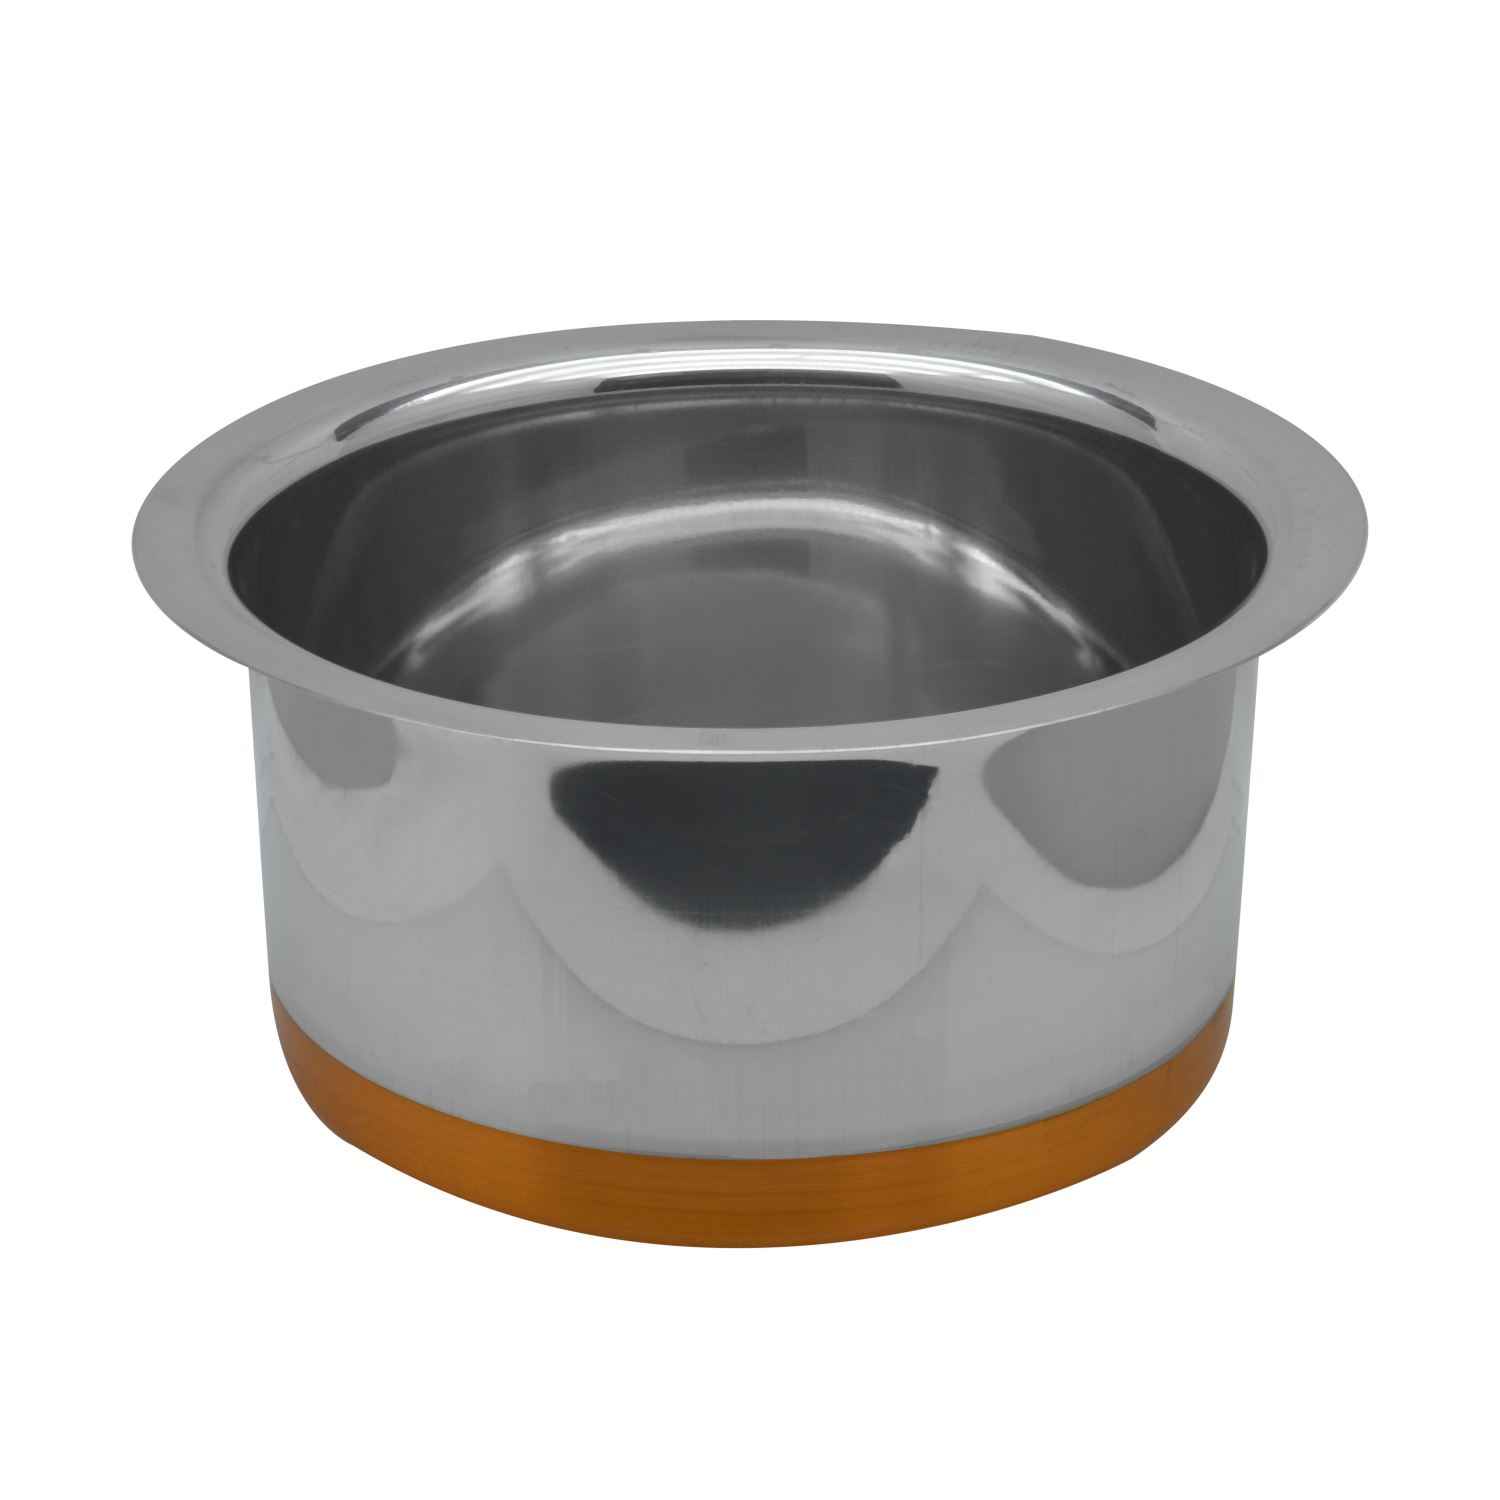 Copper Bottom Cooking Pot